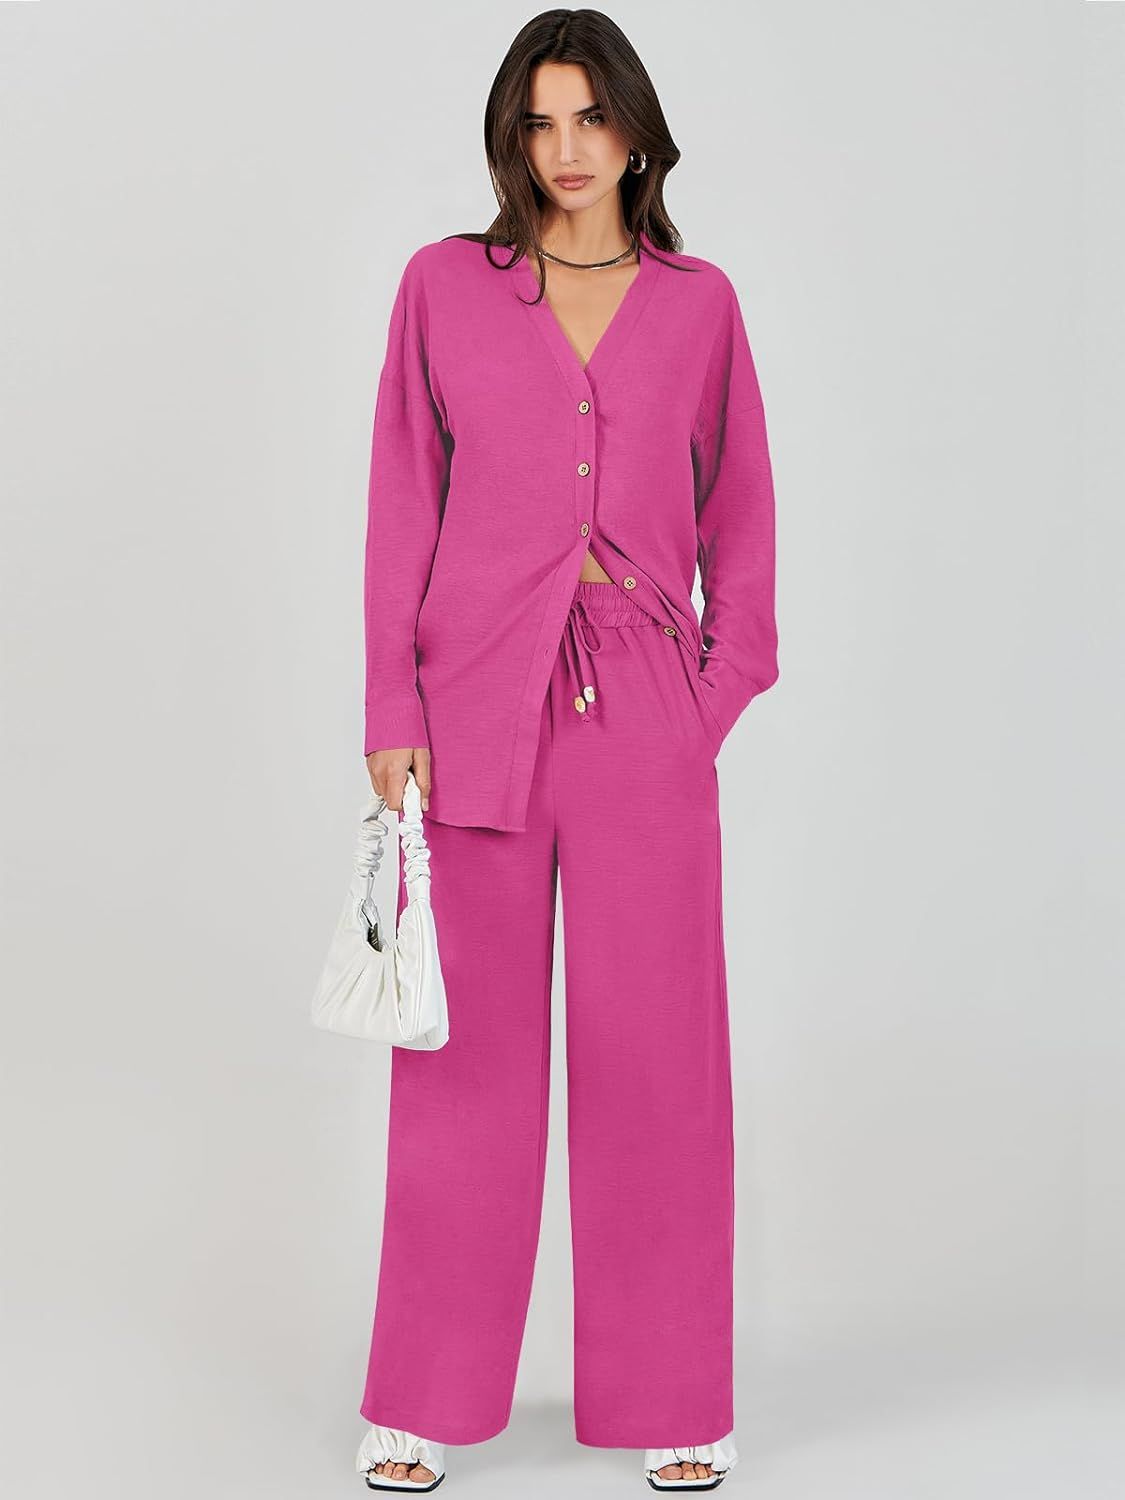 Caracilia Women's 2 Piece Outfits Lounge Sets Long Sleeve Button Down Shirts Wide Leg Palazzo Pan... | Amazon (US)